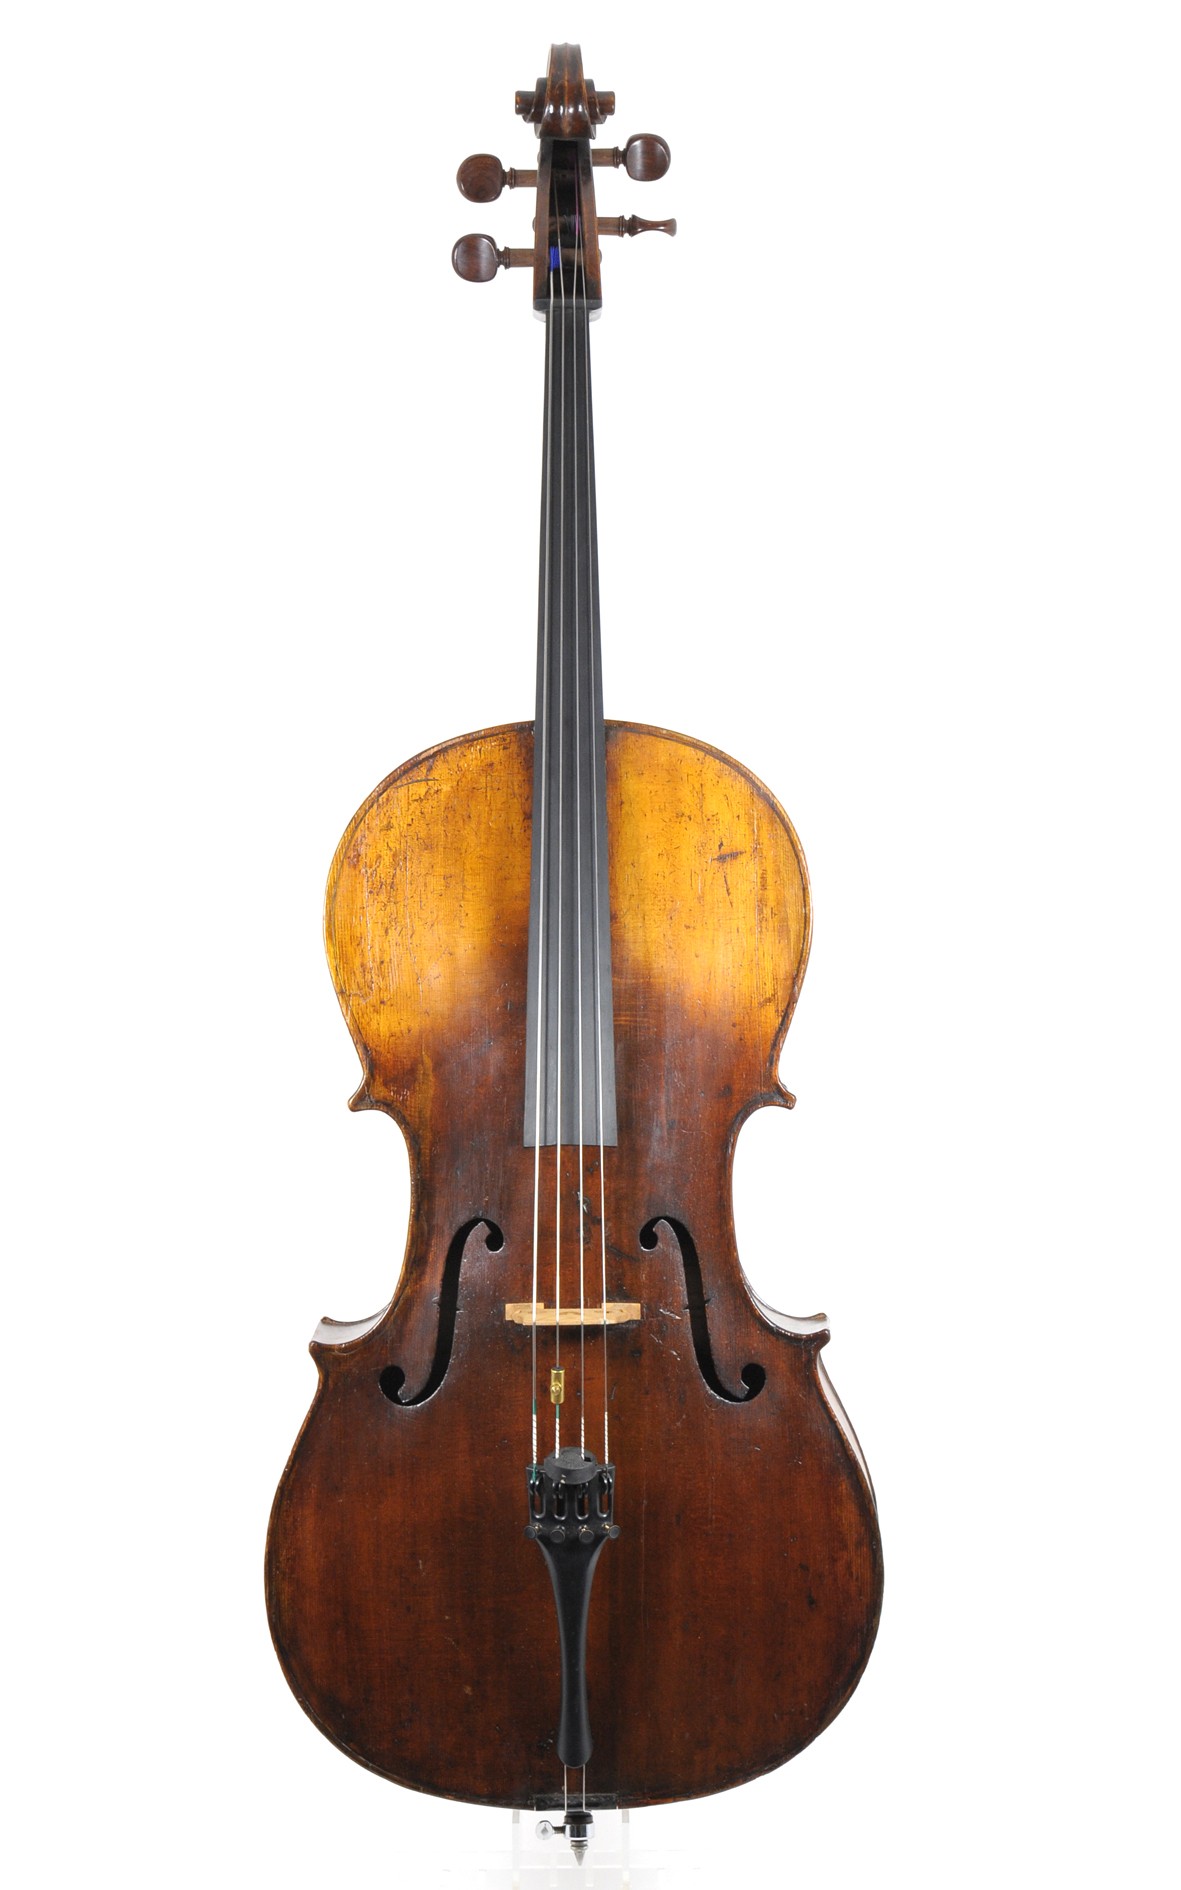 Klingenthal cello, approx. 1830 - top